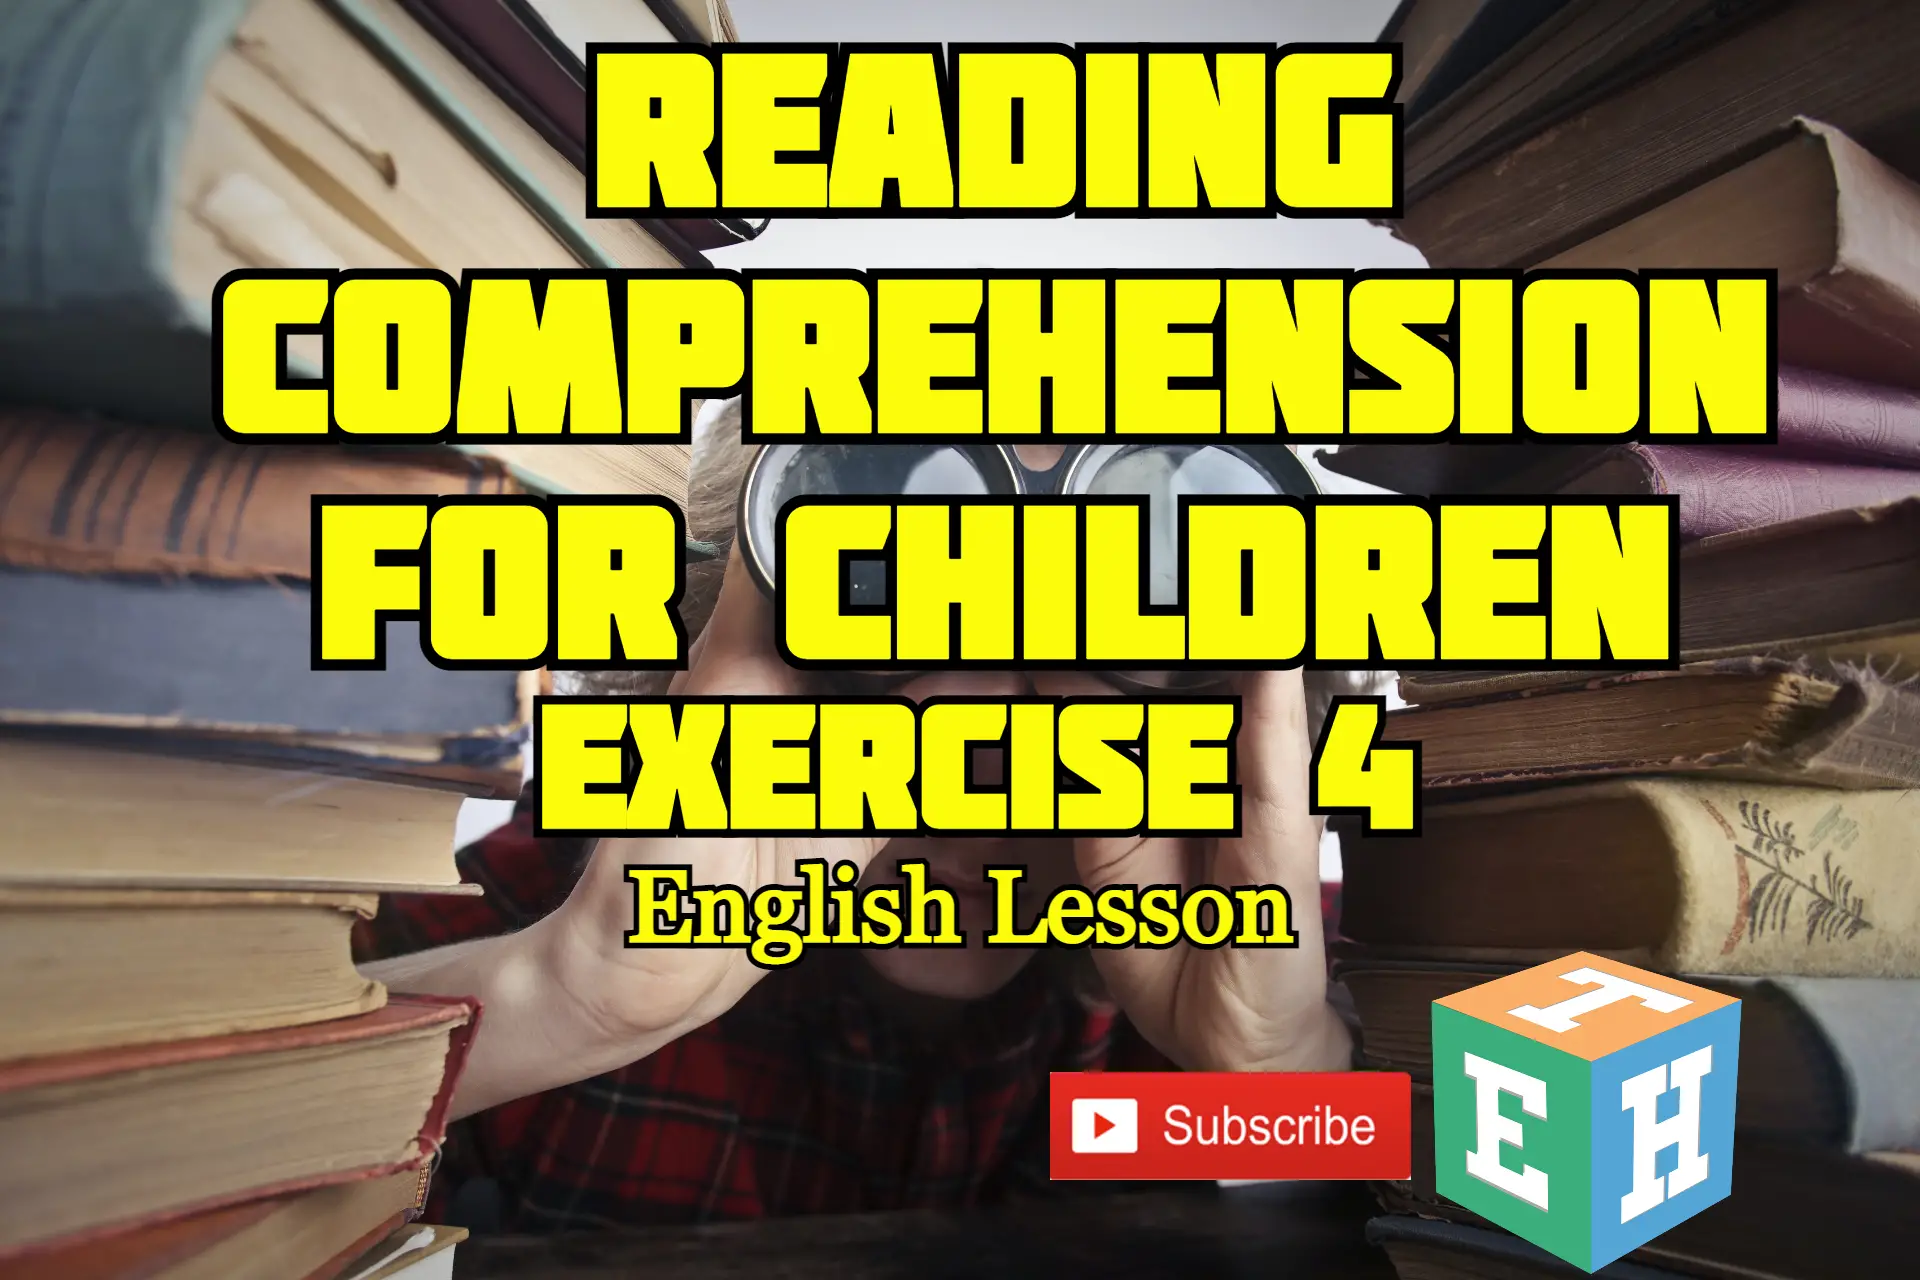 Reading comprehension for children - Exercise 4